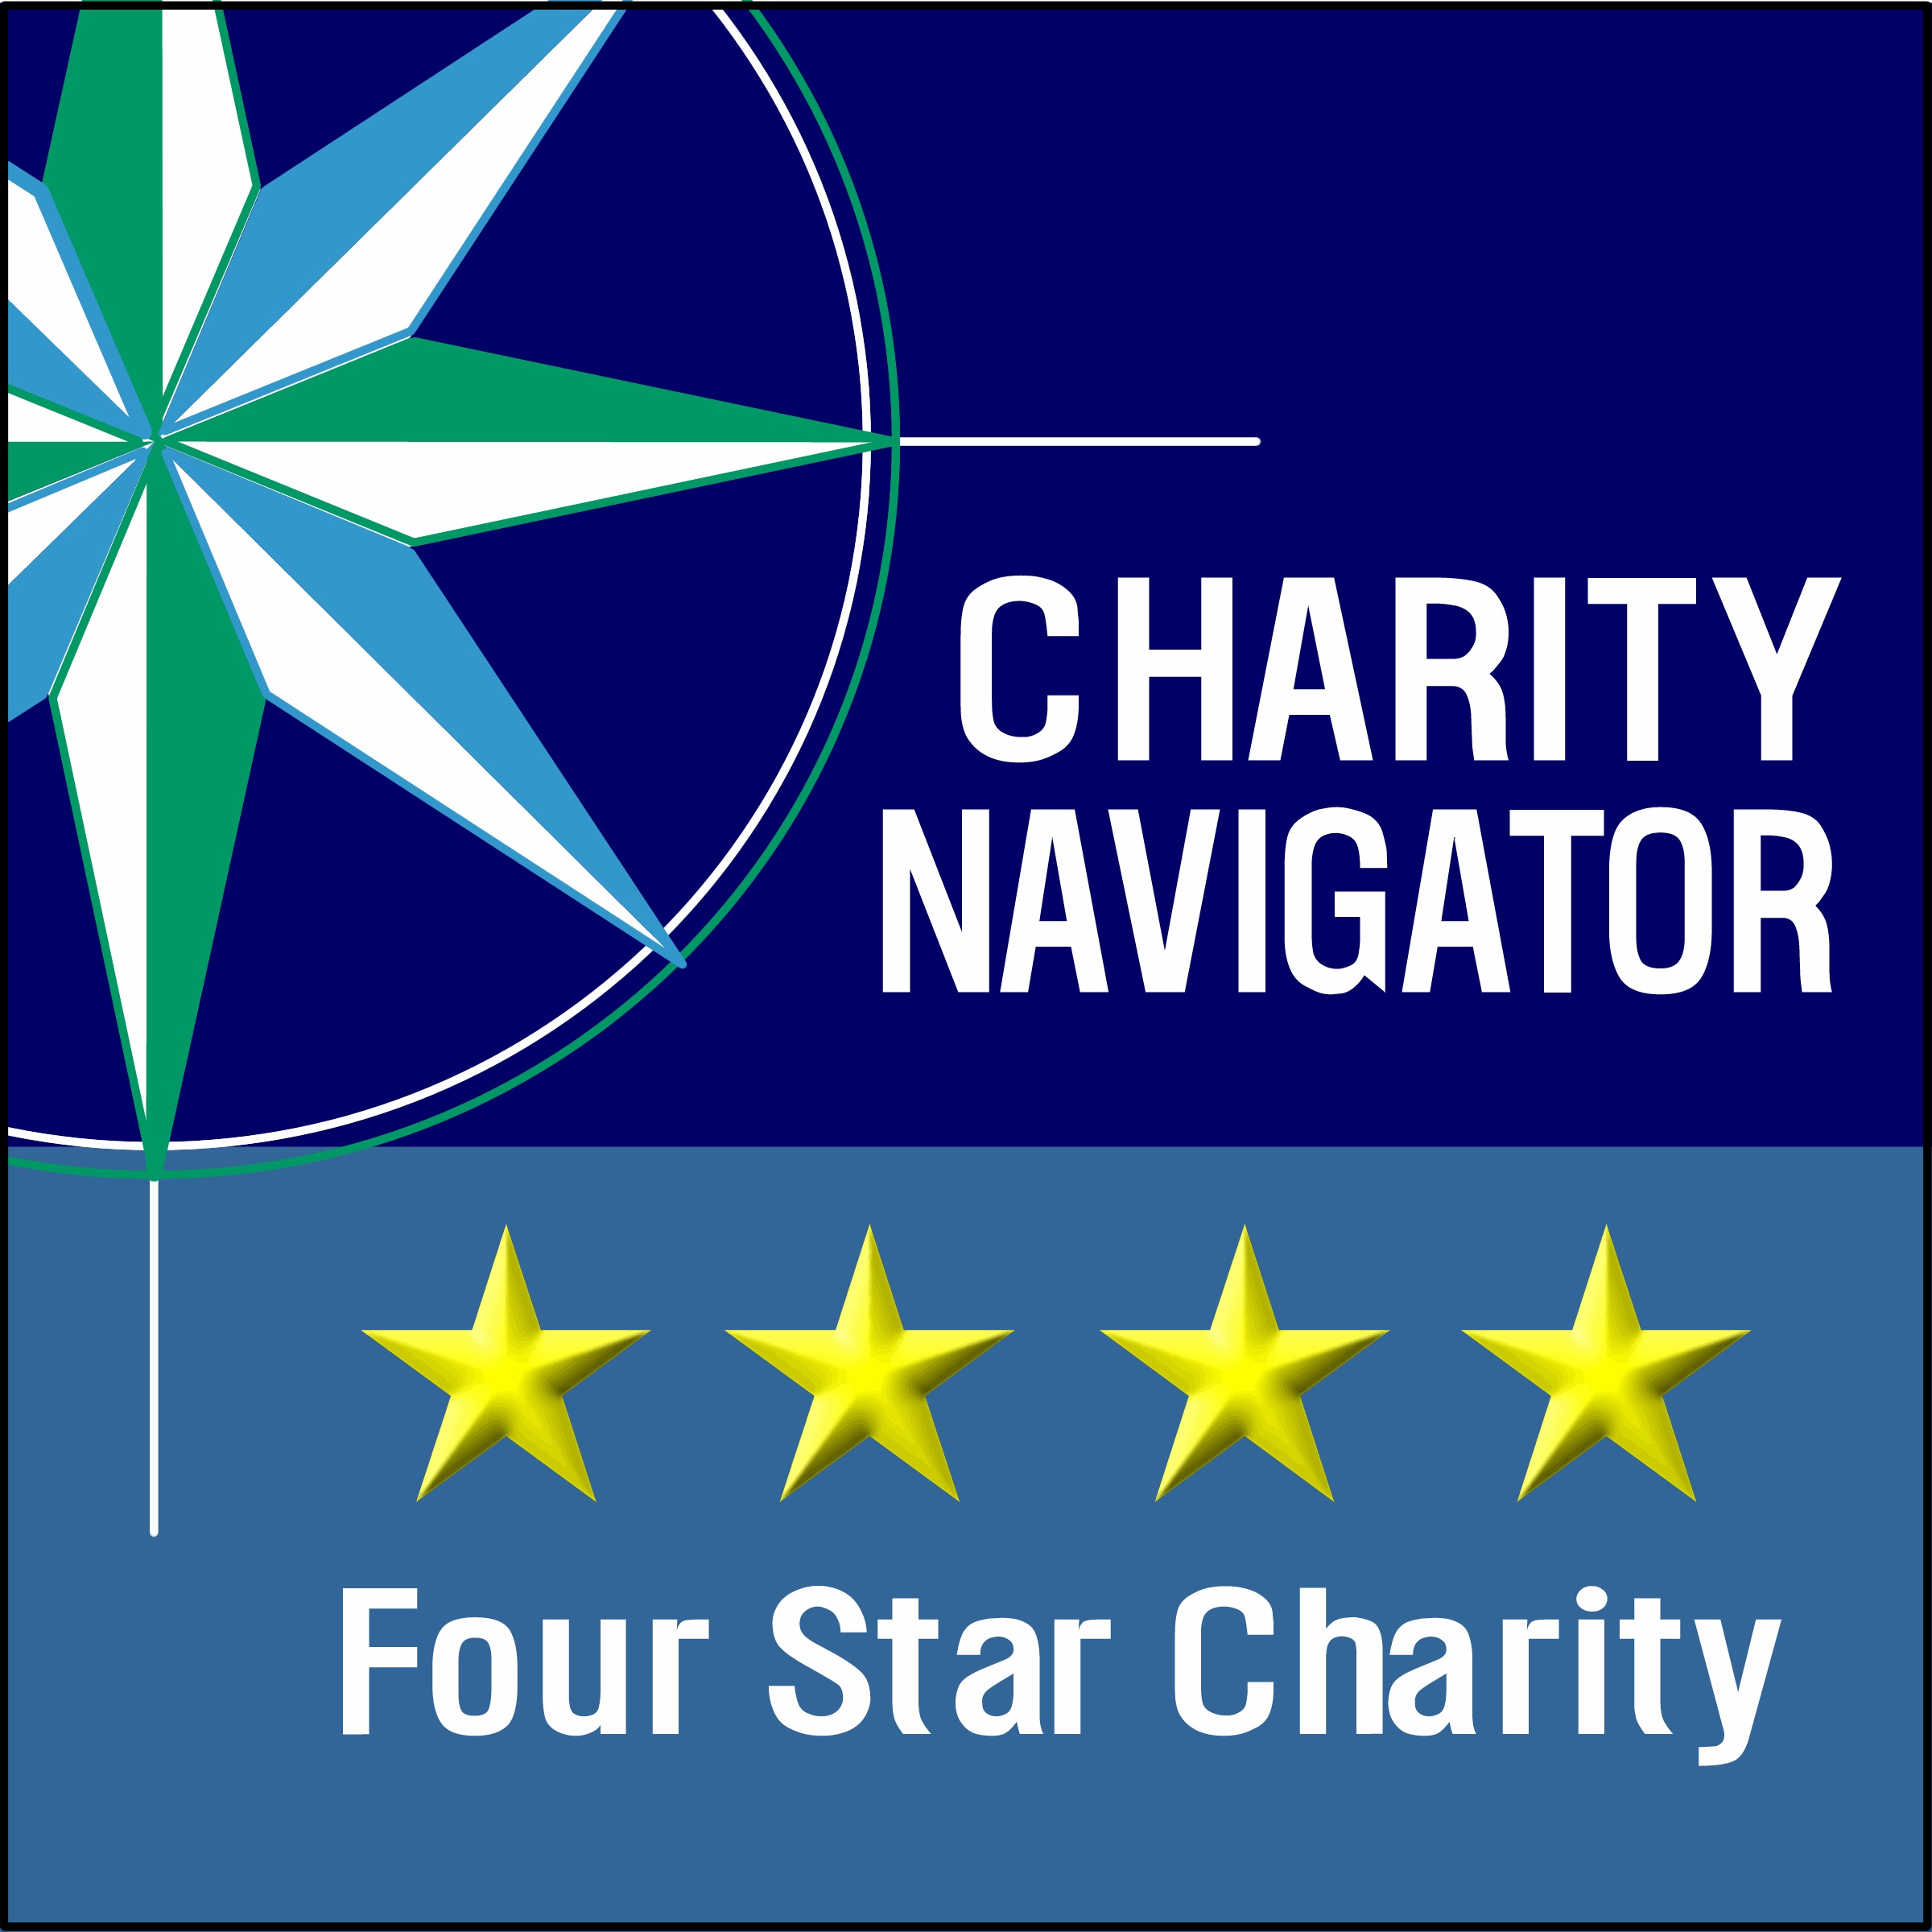 The logo of Charity Navigator